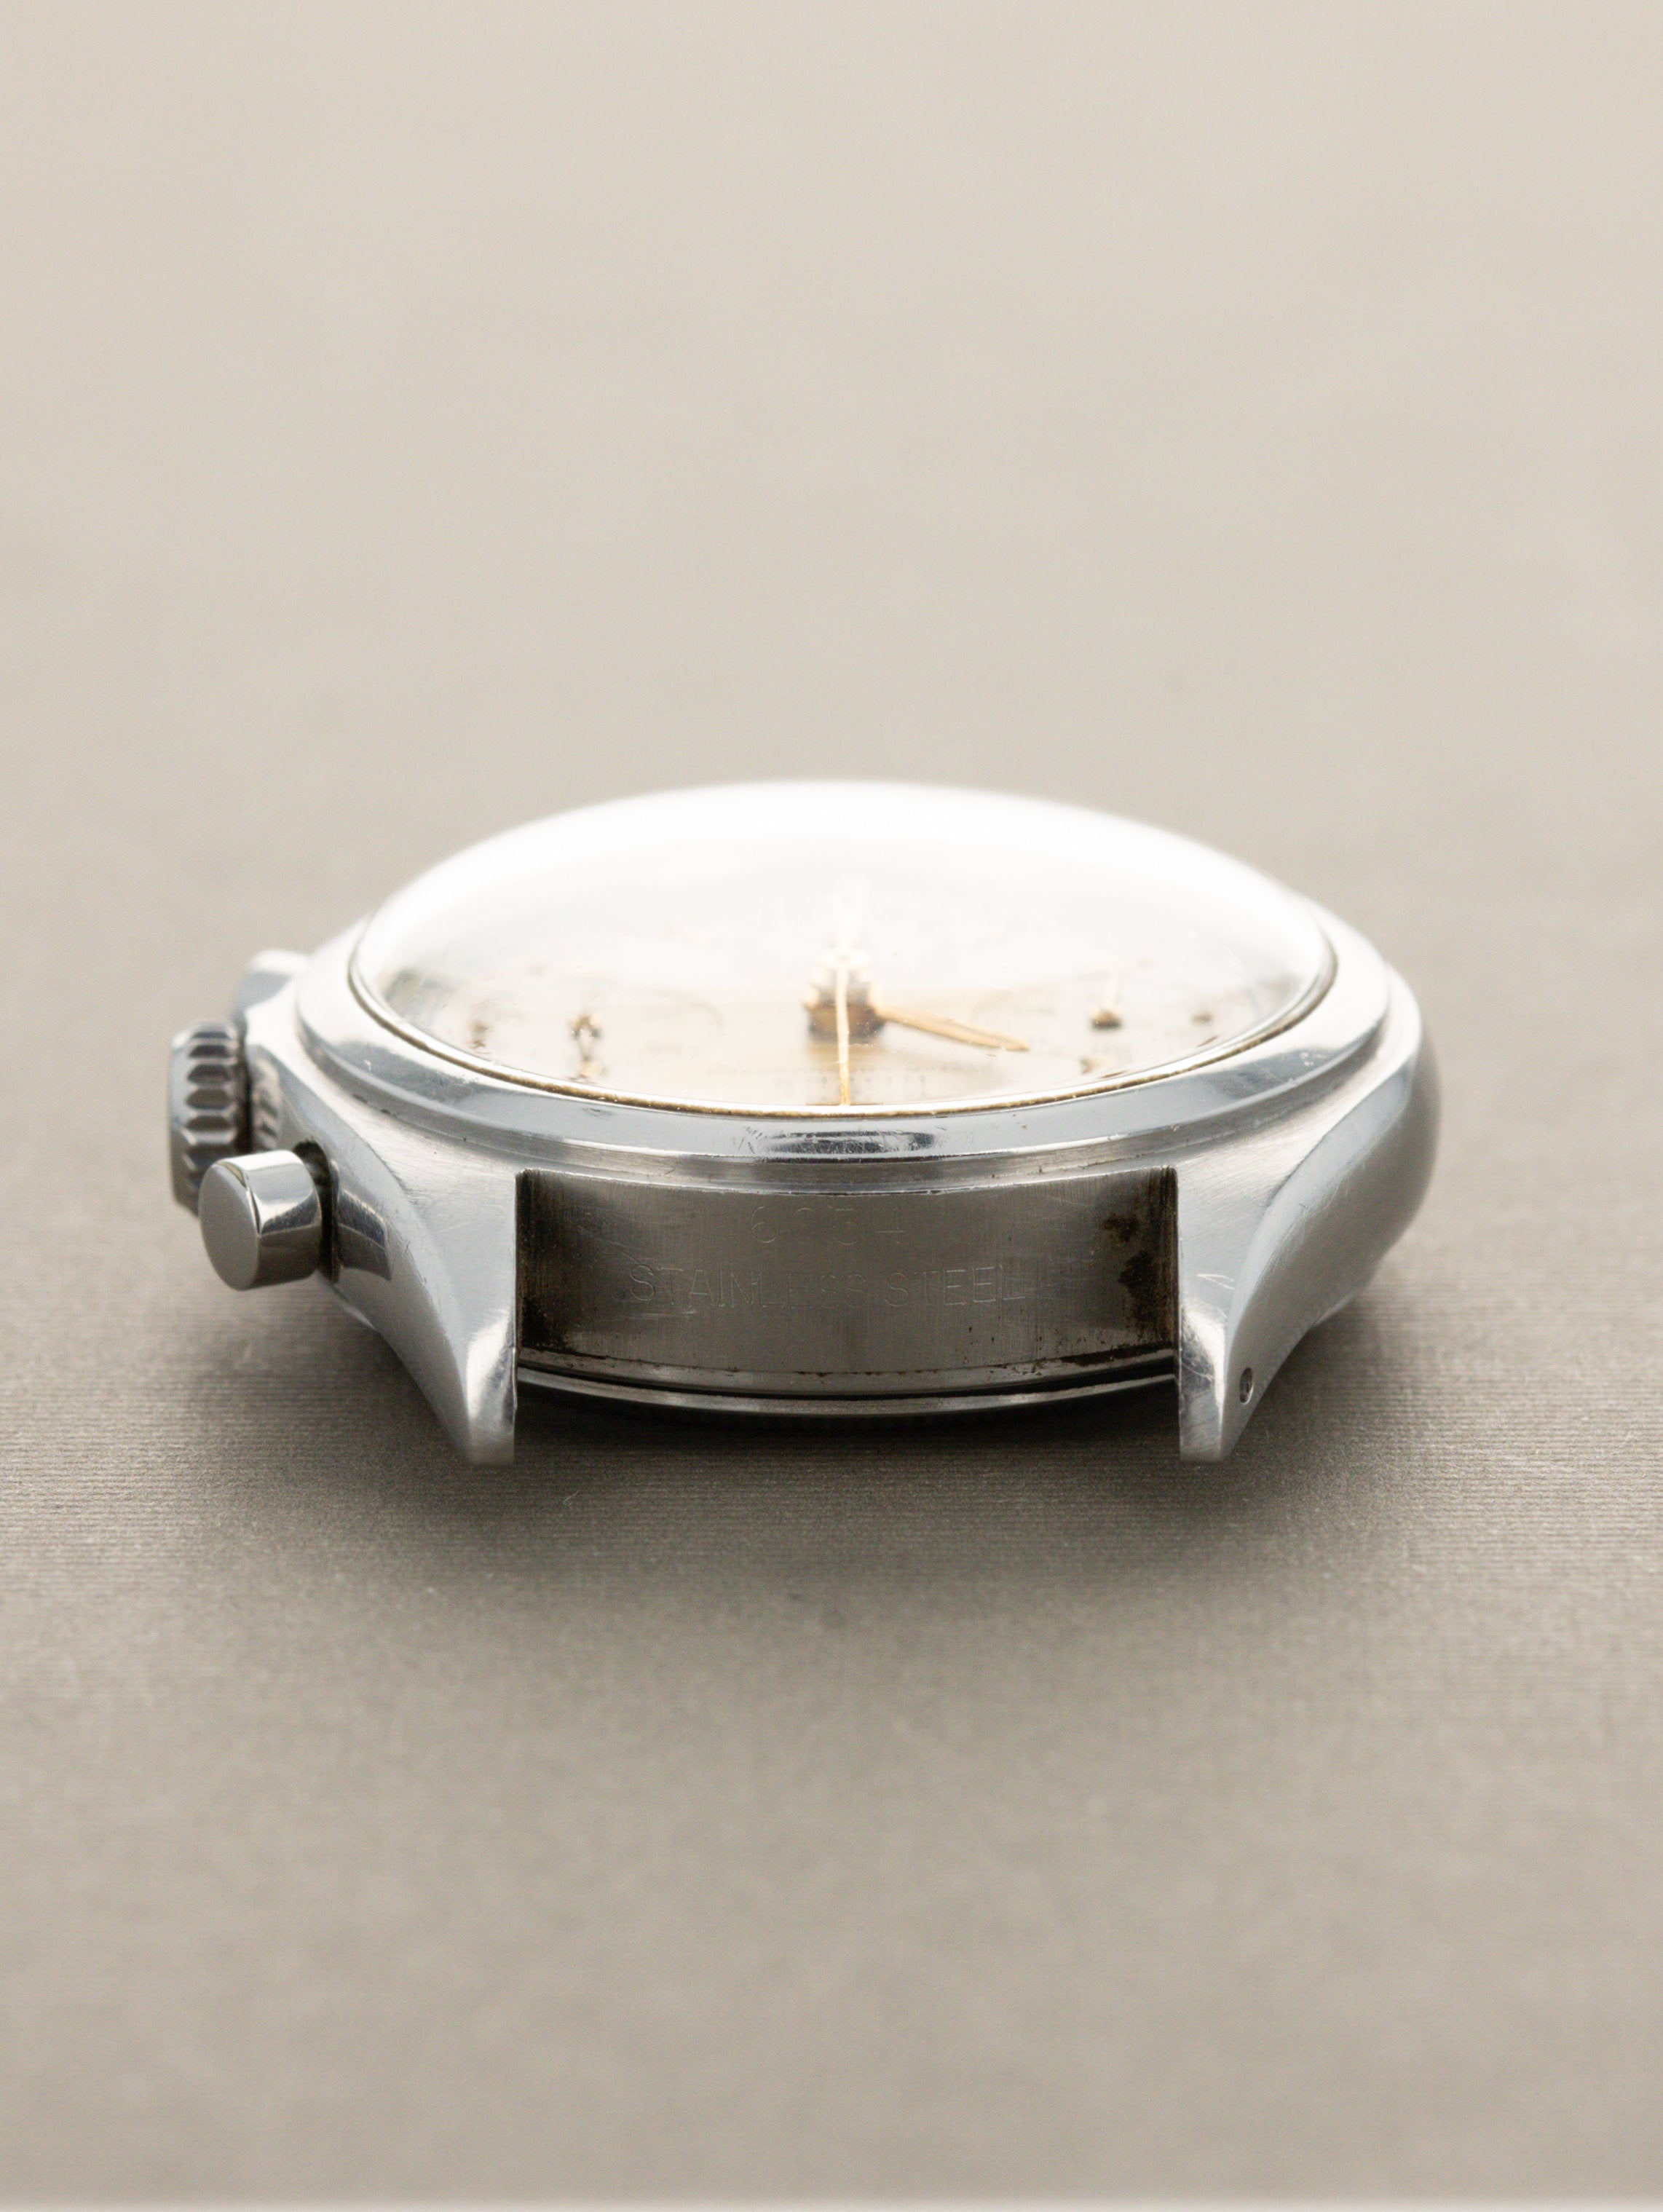 Rolex Oyster Chronograph Ref. 6034 - 'Pre-Daytona'